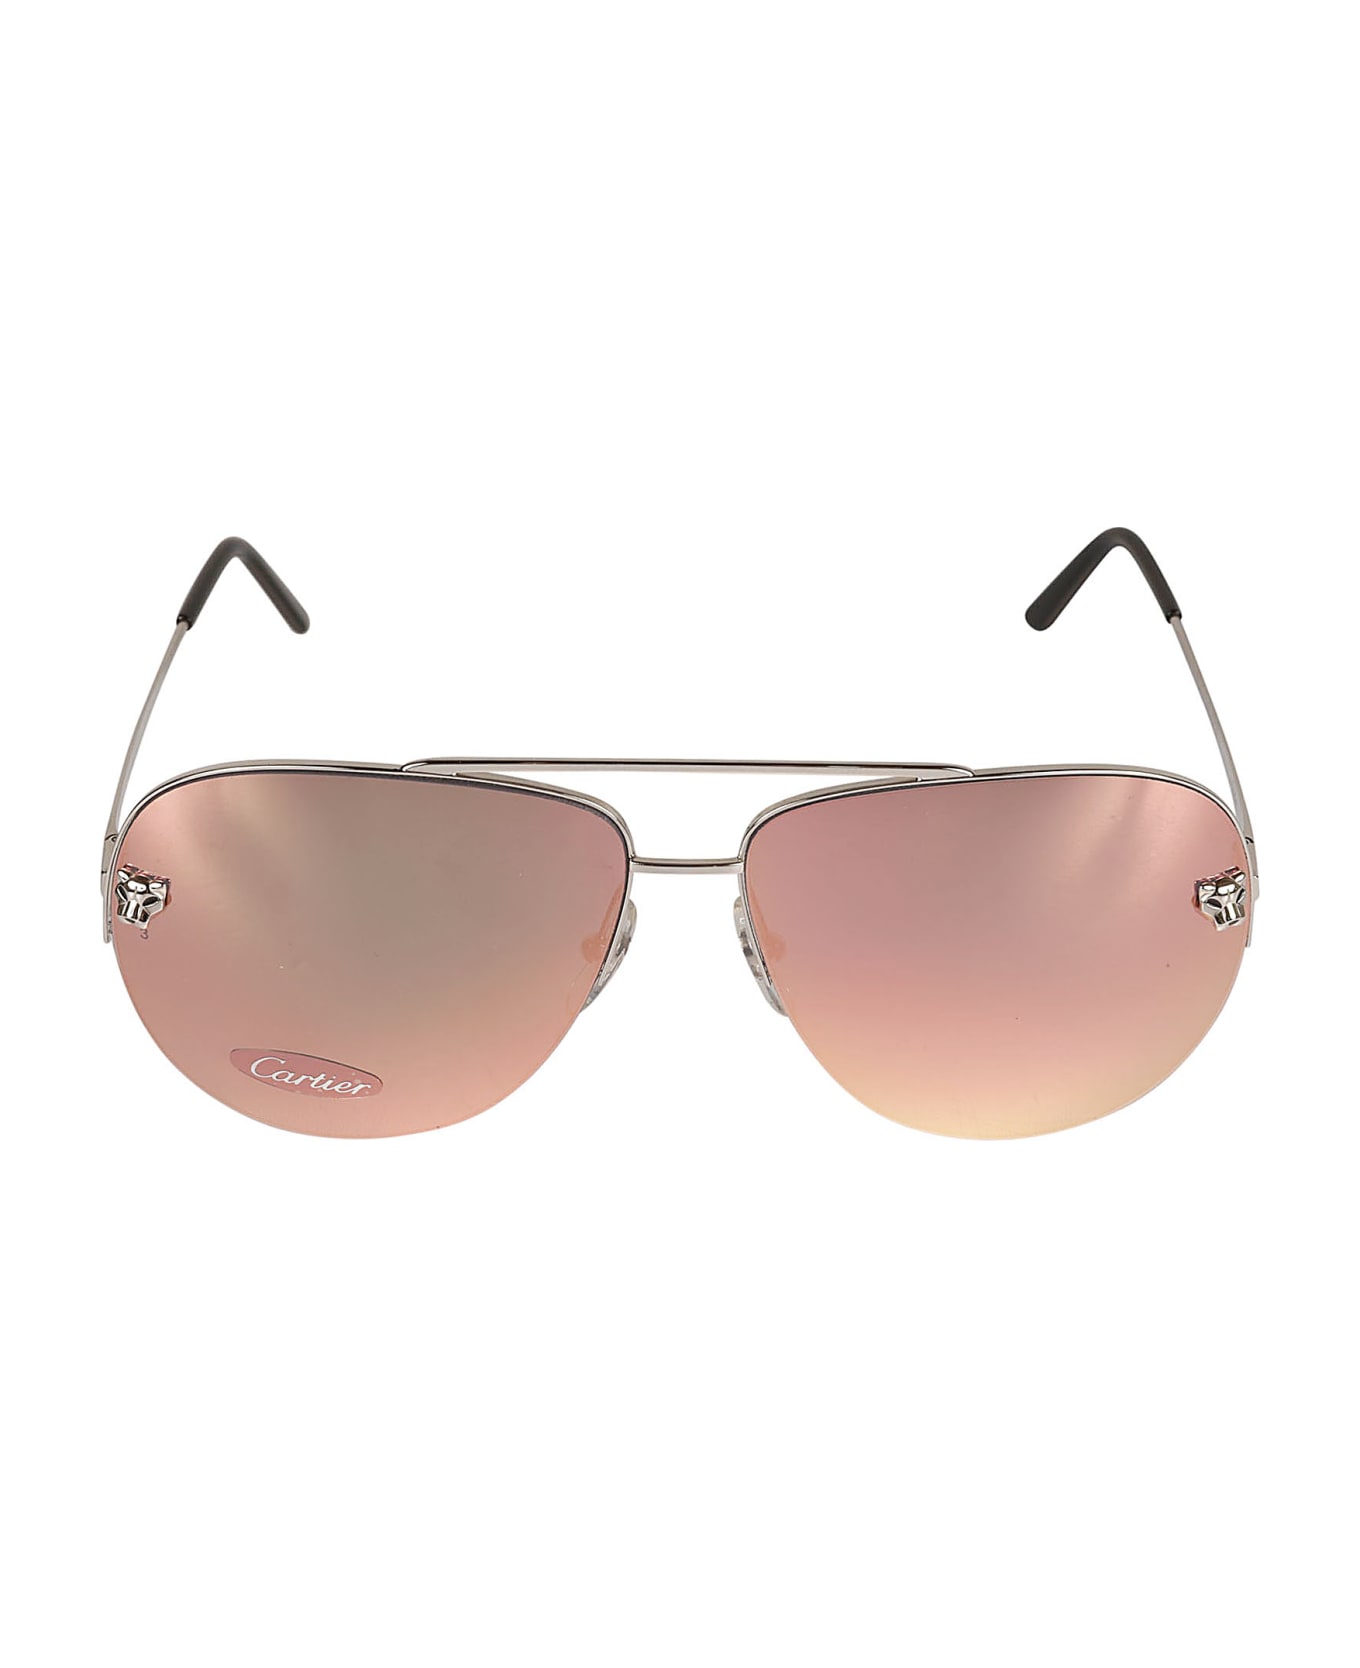 Cartier Eyewear Aviator Classic Sunglasses - PLATINUM